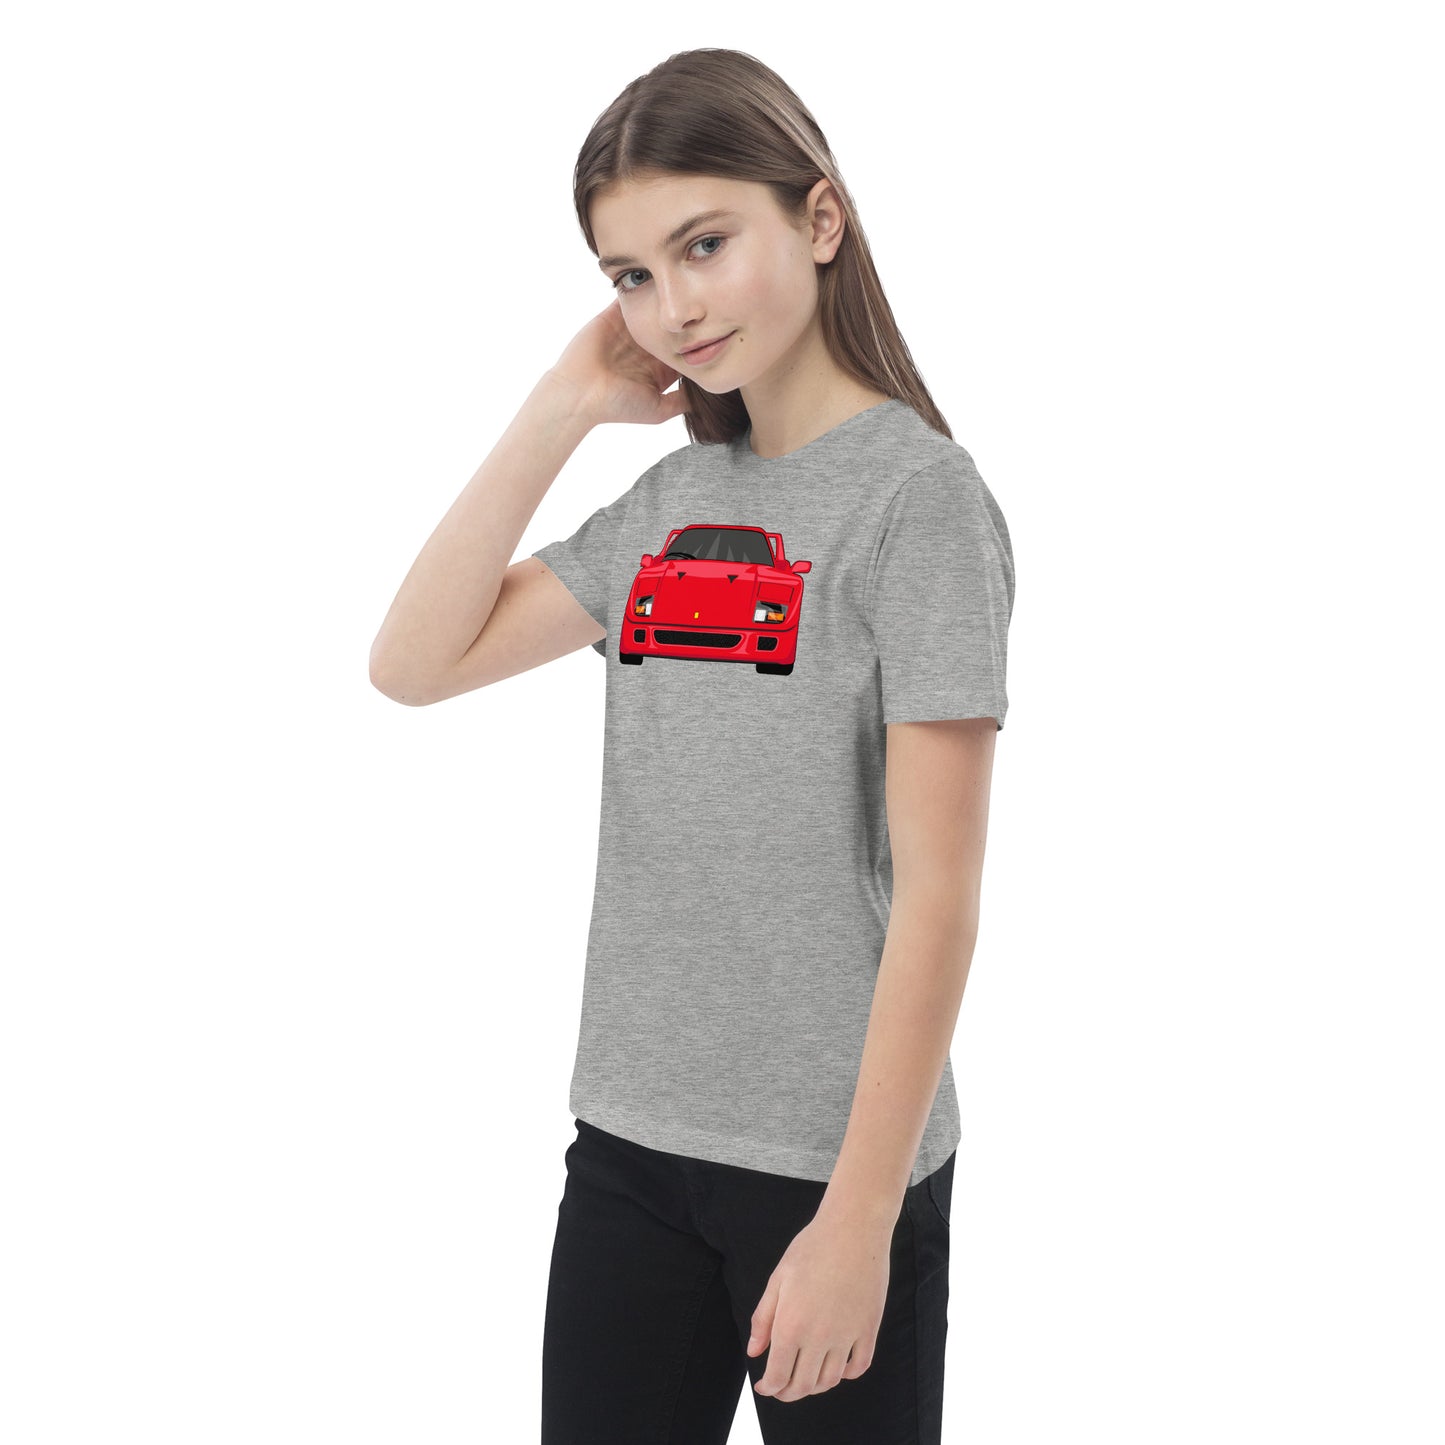 Camiseta kids unisex Ferrari F40 "Garage Days" 1 of 100